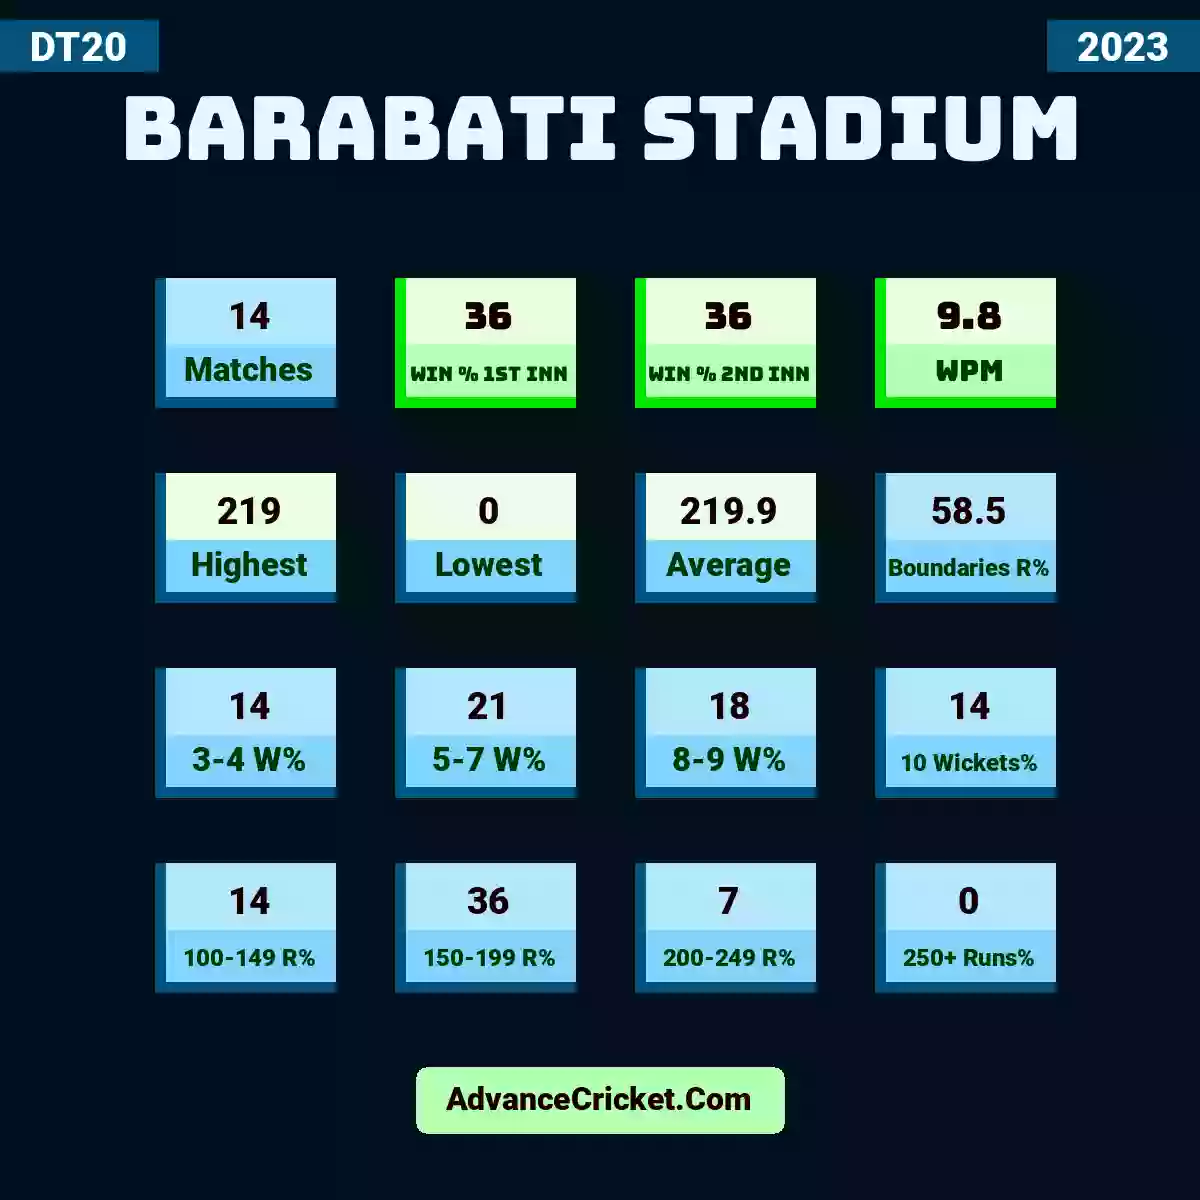 Image showing Barabati Stadium with Matches: 14, Win % 1st Inn: 36, Win % 2nd Inn: 36, WPM: 9.8, Highest: 219, Lowest: 0, Average: 219.9, Boundaries R%: 58.5, 3-4 W%: 14, 5-7 W%: 21, 8-9 W%: 18, 10 Wickets%: 14, 100-149 R%: 14, 150-199 R%: 36, 200-249 R%: 7, 250+ Runs%: 0.